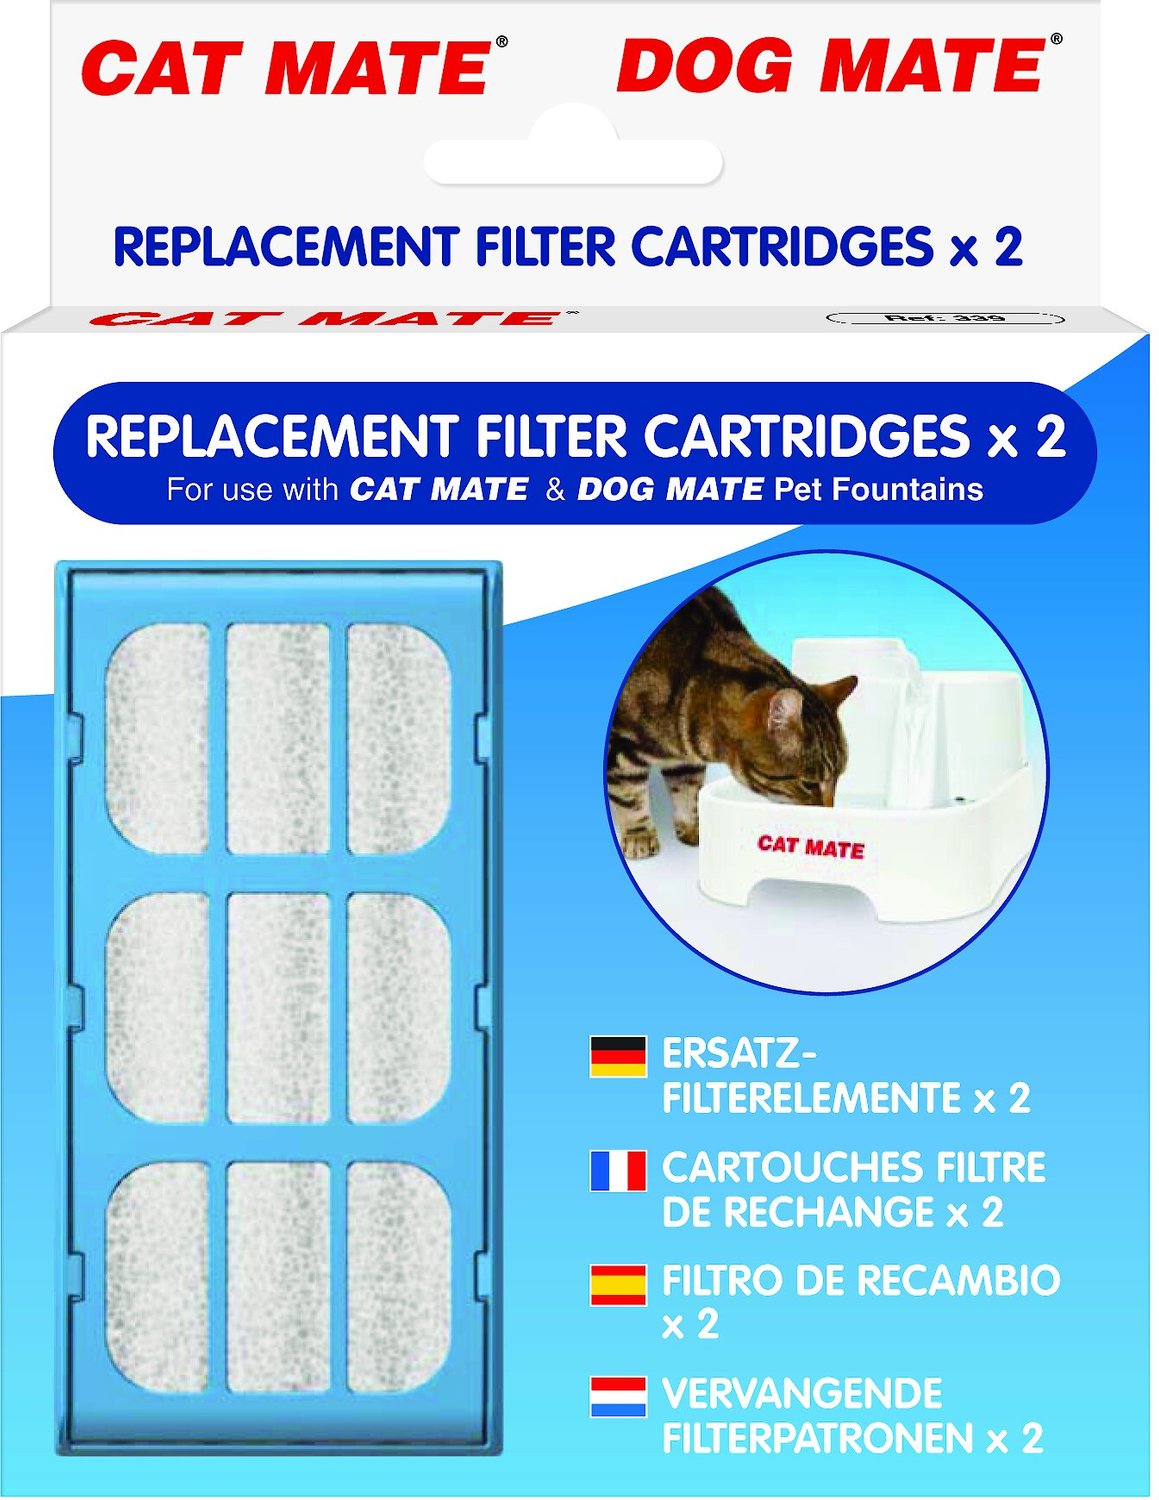 CAT MATE Replacement Filter Cartridges 